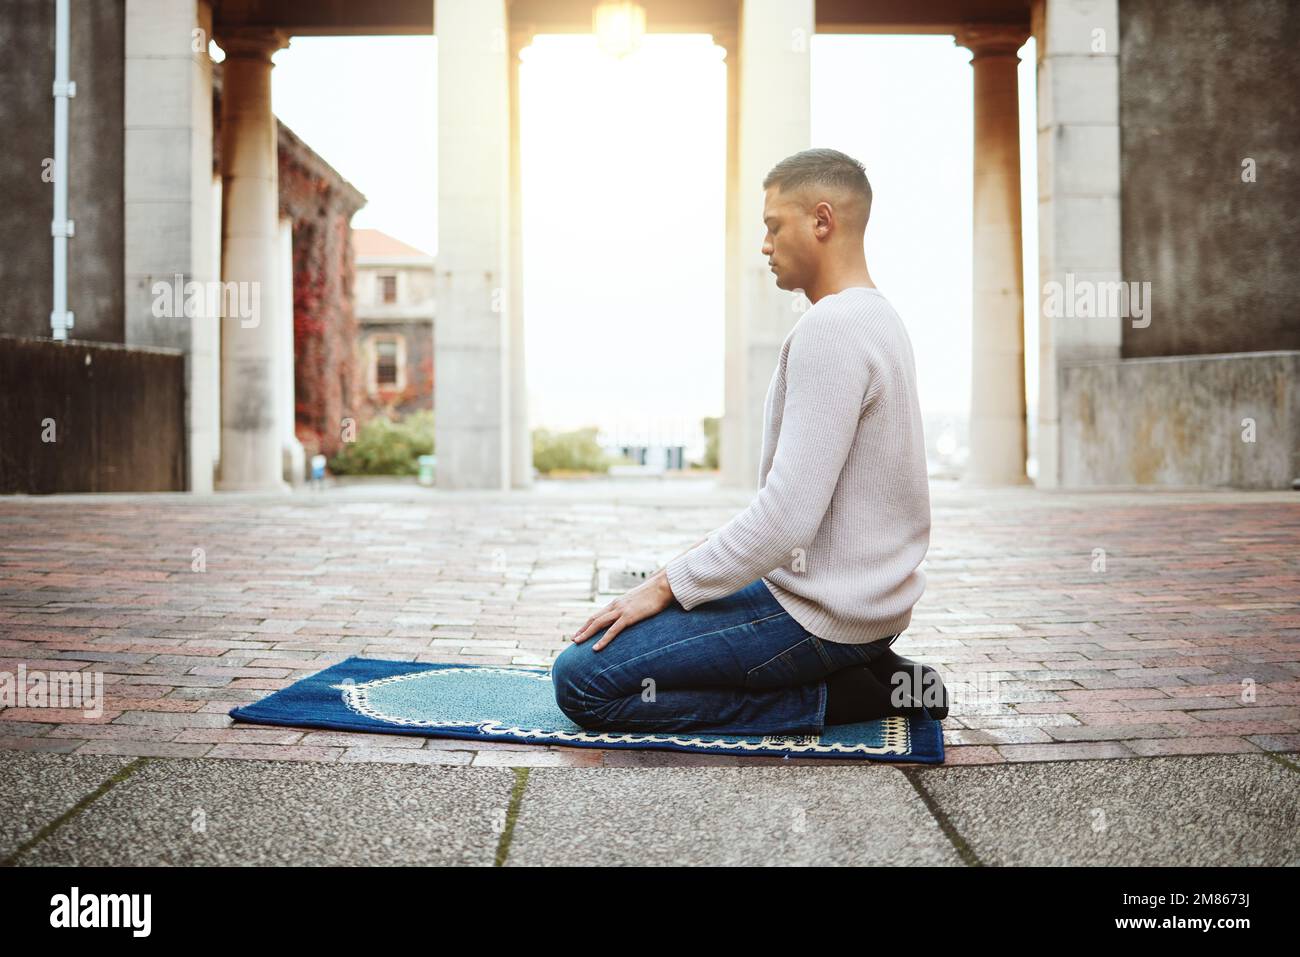 Muslim, faith and praying with an islamic man prayer to god on a carpet ...